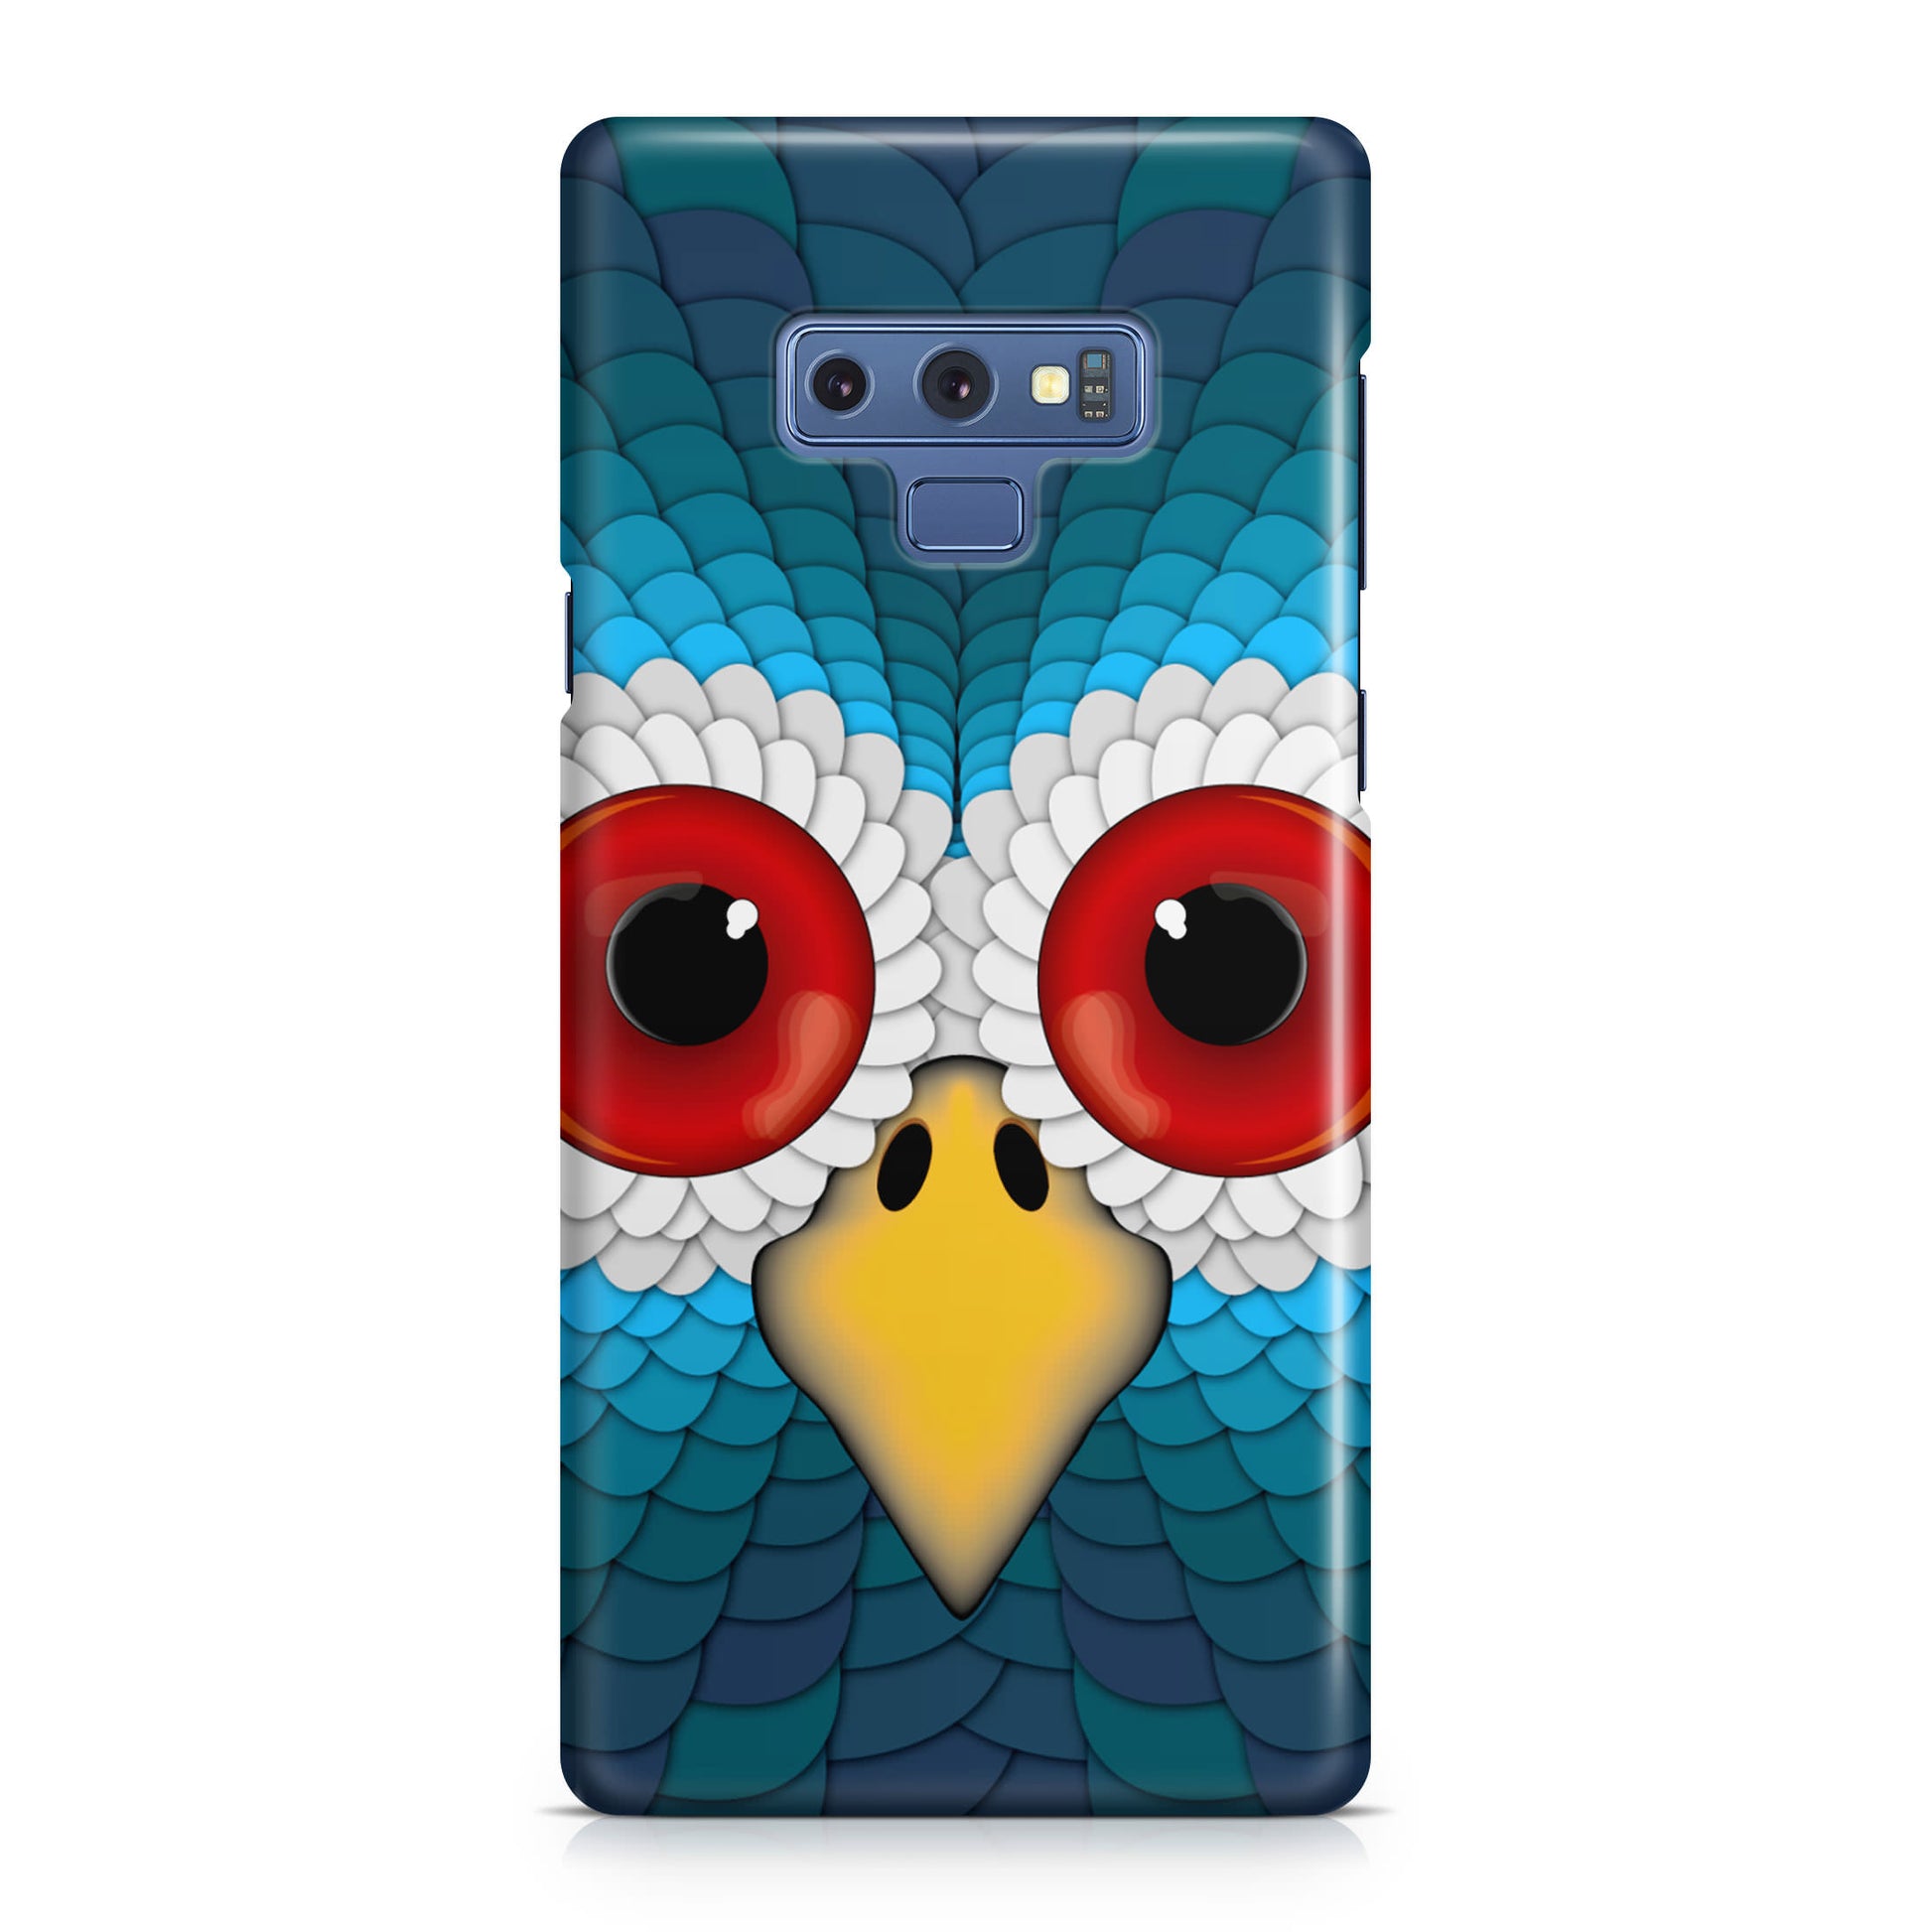 Owl Art Galaxy Note 9 Case